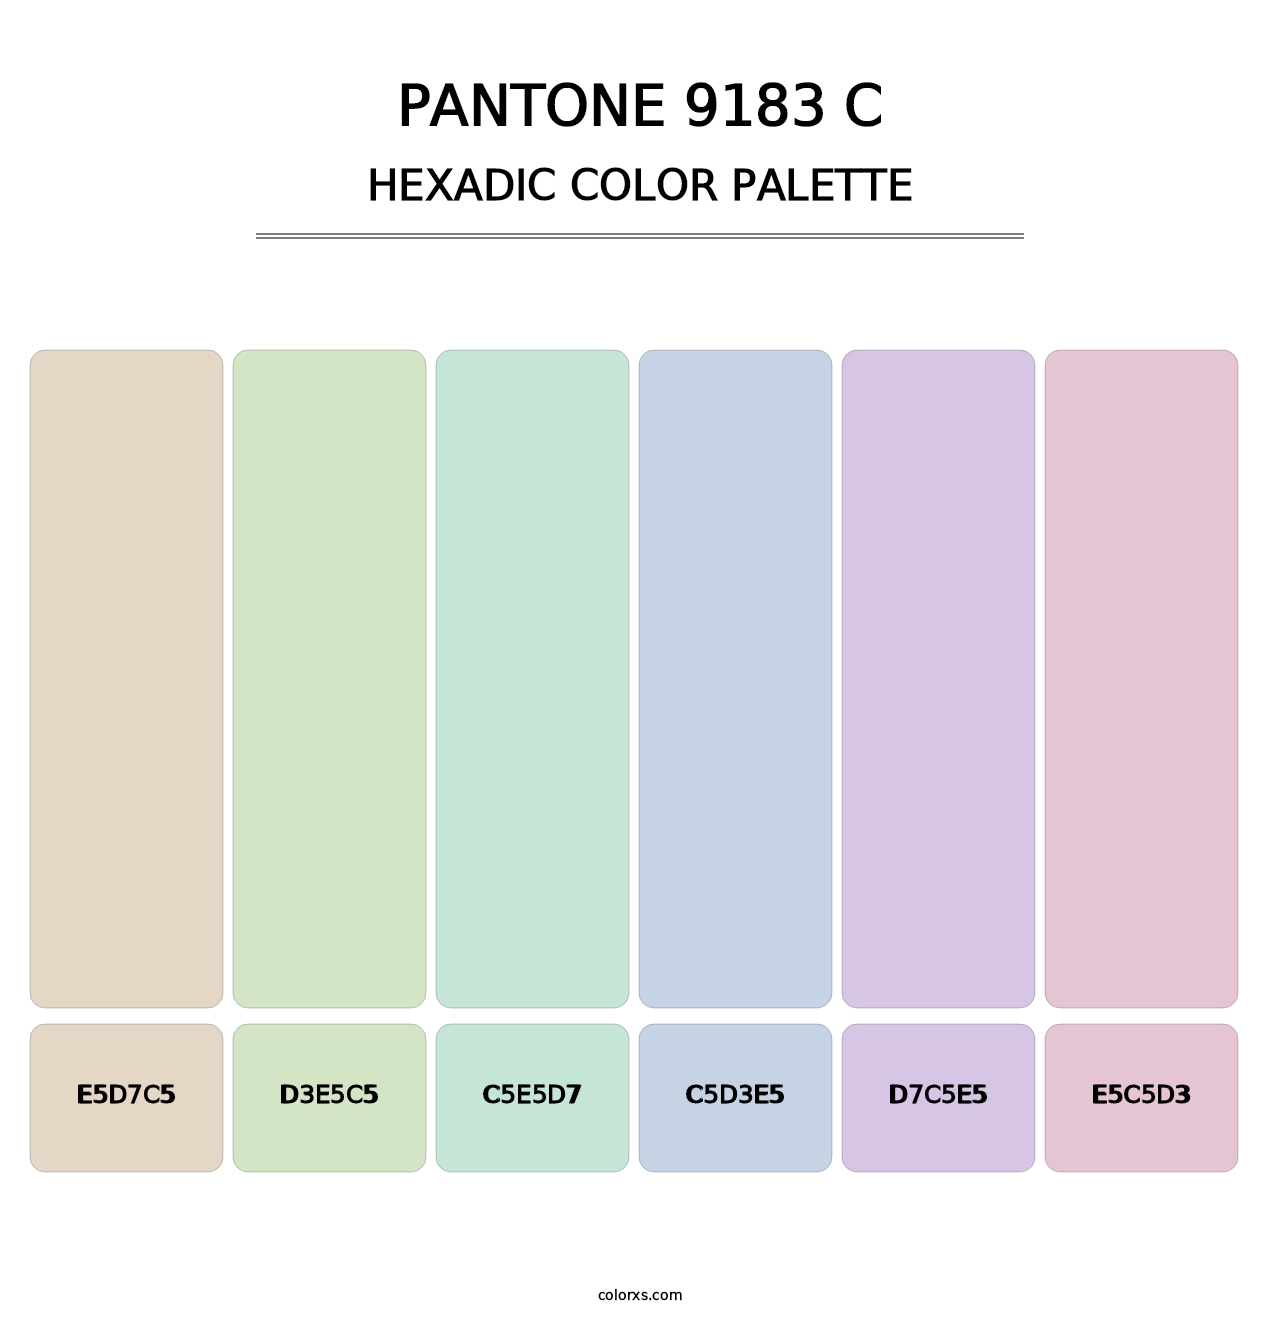 PANTONE 9183 C - Hexadic Color Palette